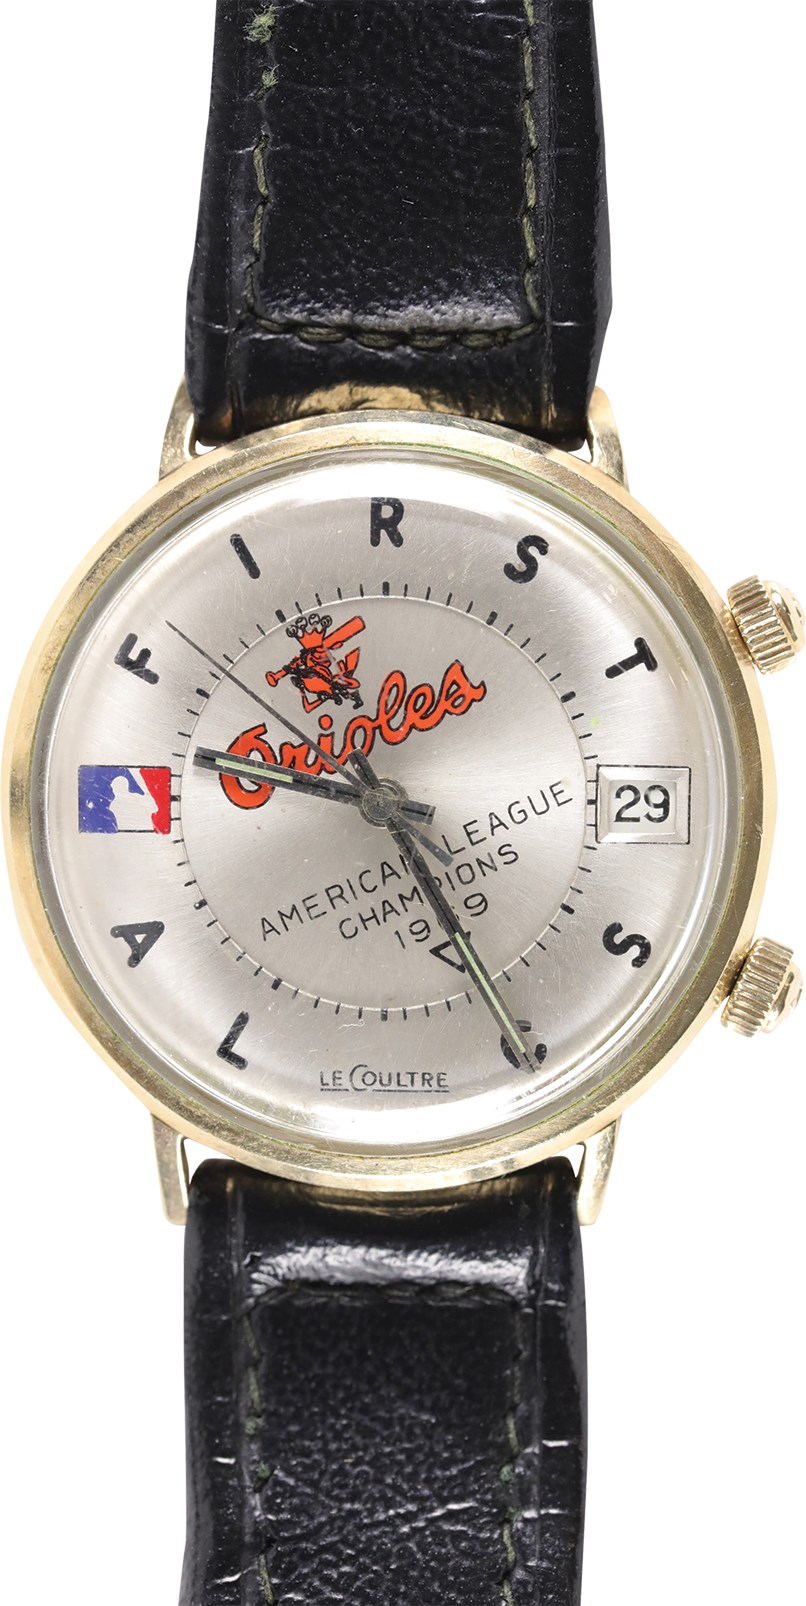 Baseball Awards - 1969 Baltimore Orioles American League Champions Commemorative Watch